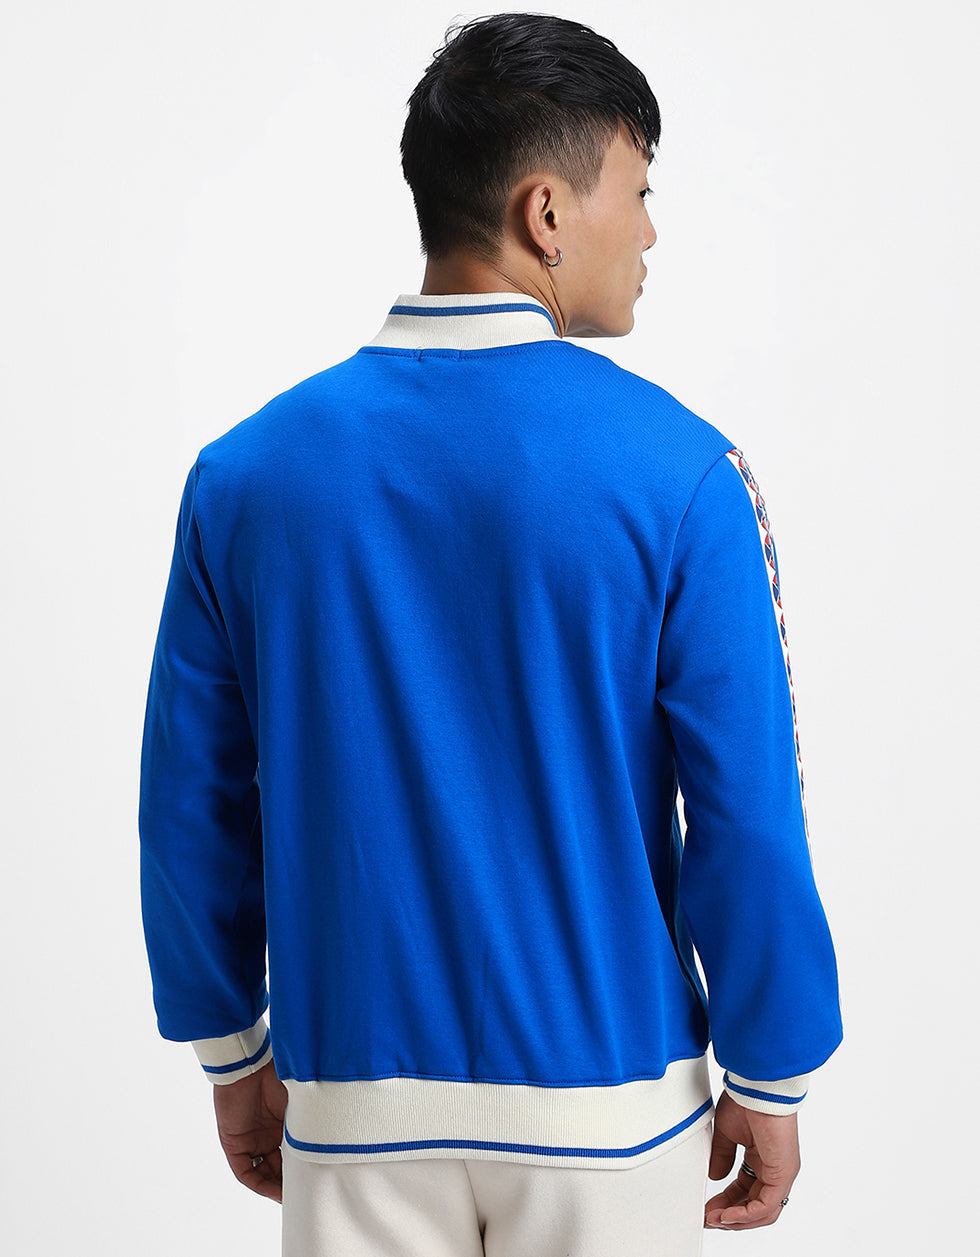 Vibrant BLUE Jacket - Stay Stylish and Warm! Veirdo